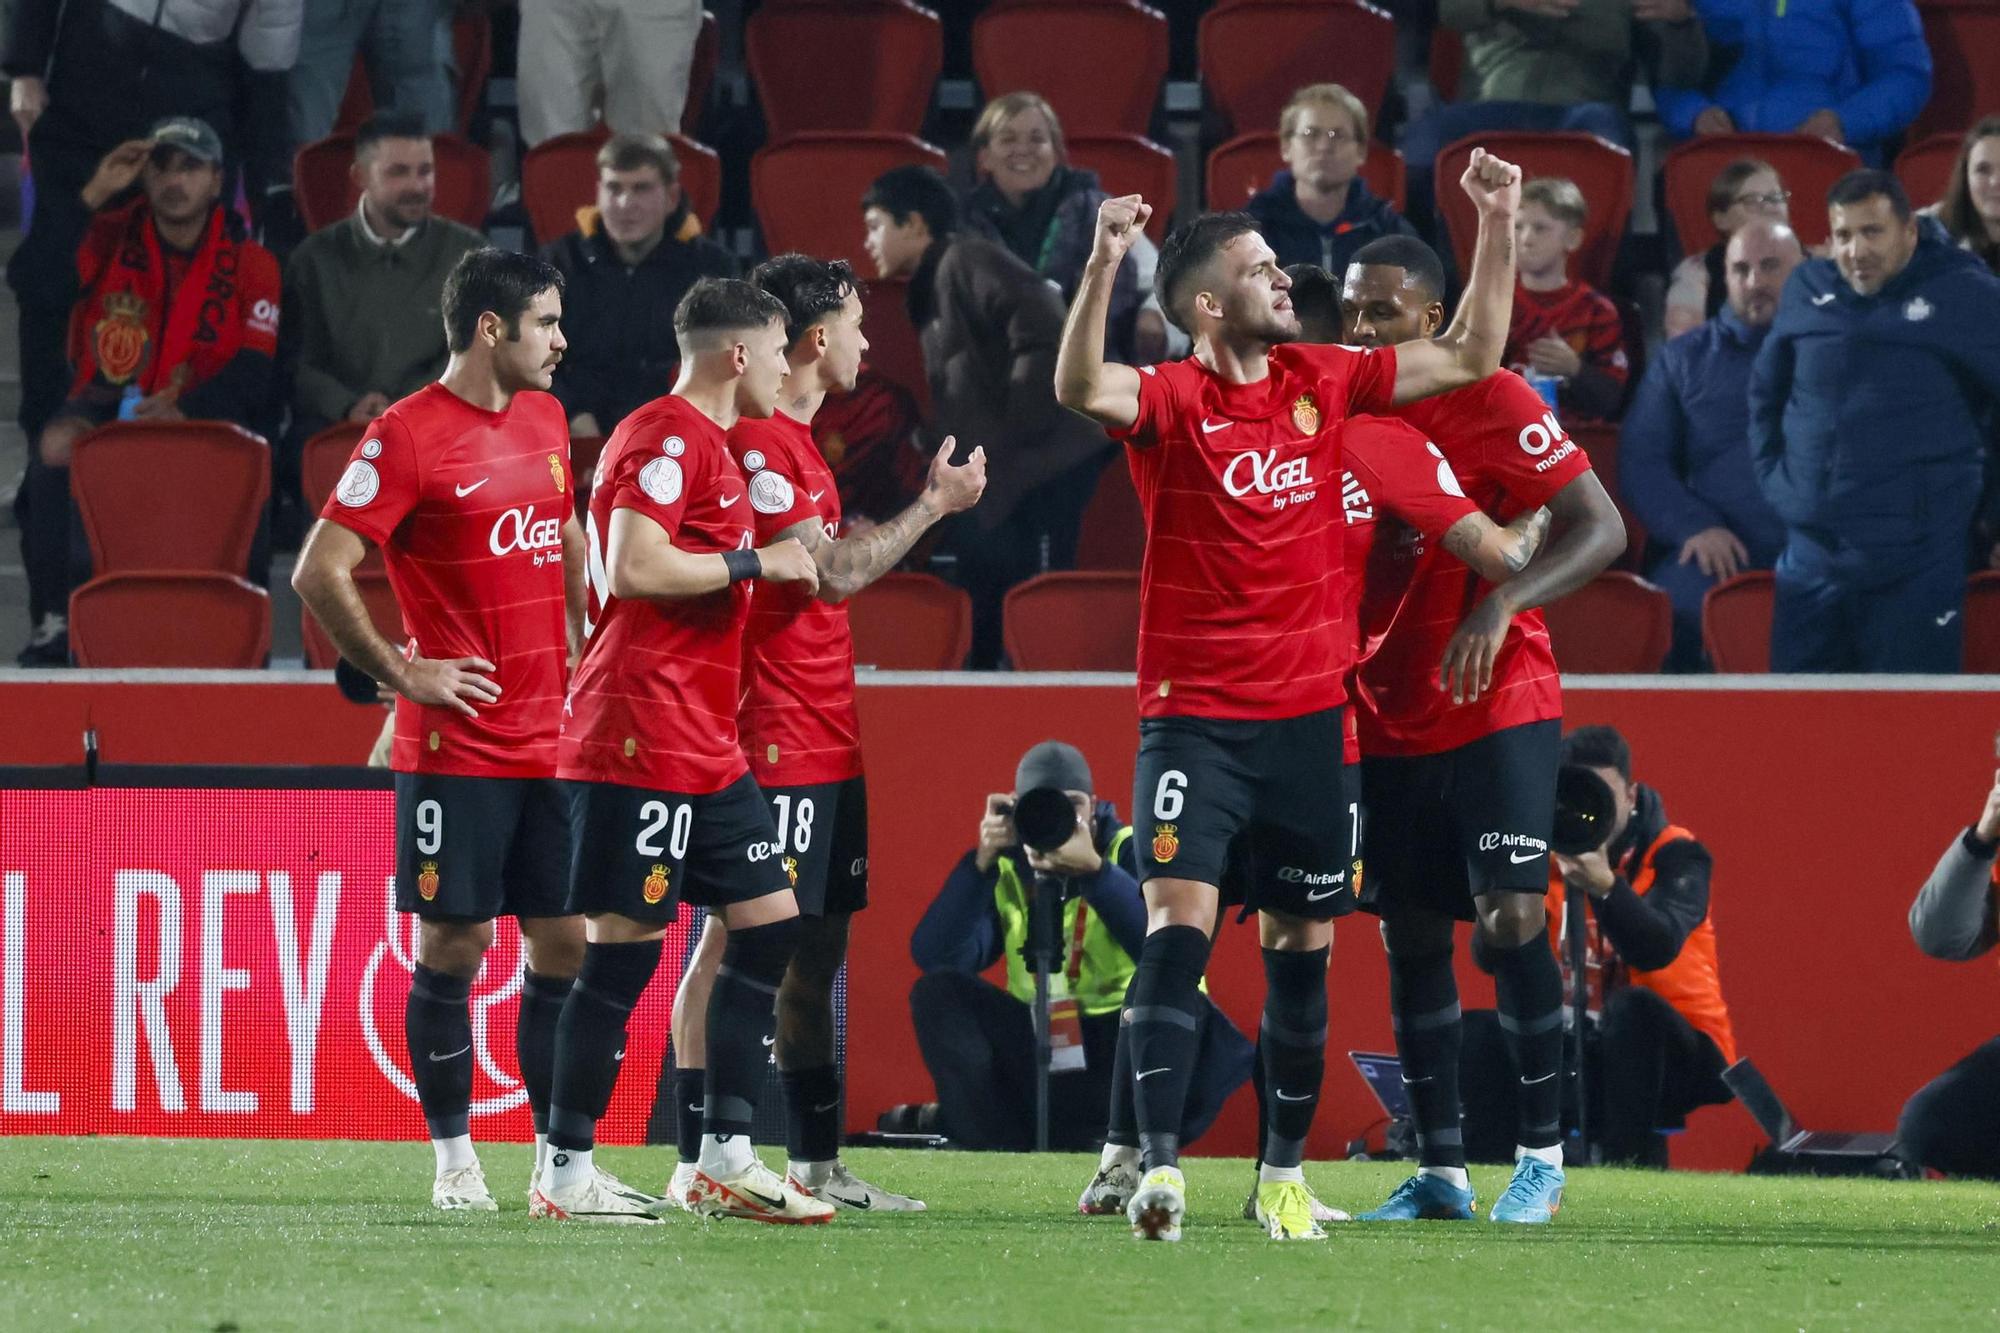 RCD Mallorca-Girona: Las mejores fotos de la victoria del Mallorca en la eliminatoria de Copa del Rey